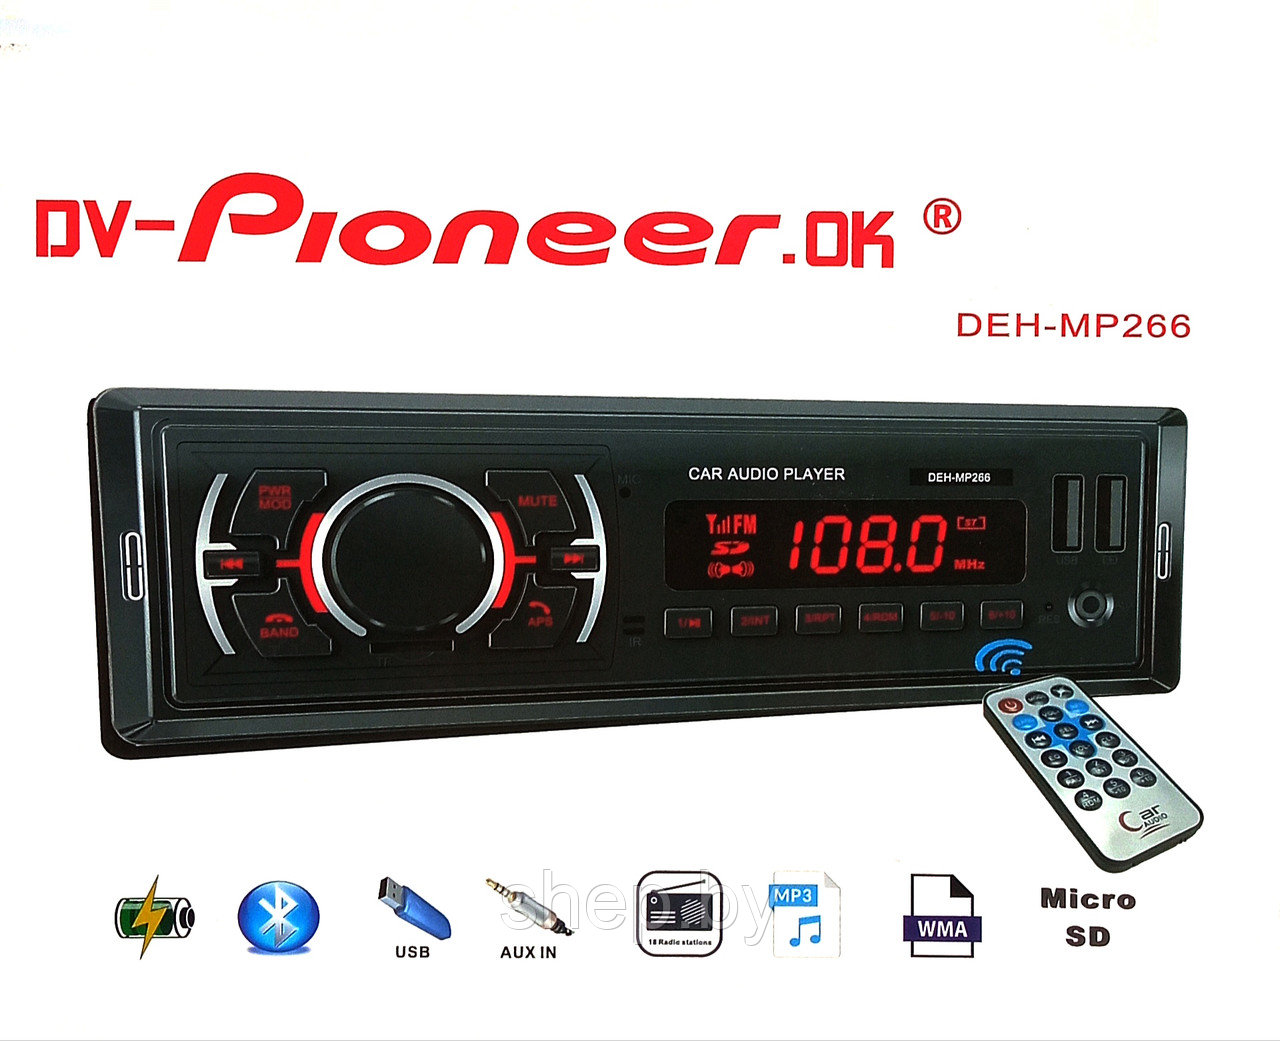 Автомагнитола DV-Pioneer.OK DEH-MP266 (New) BT, LED, MP3/2 USB/TF/FM/AM, AUX, RCA пульт